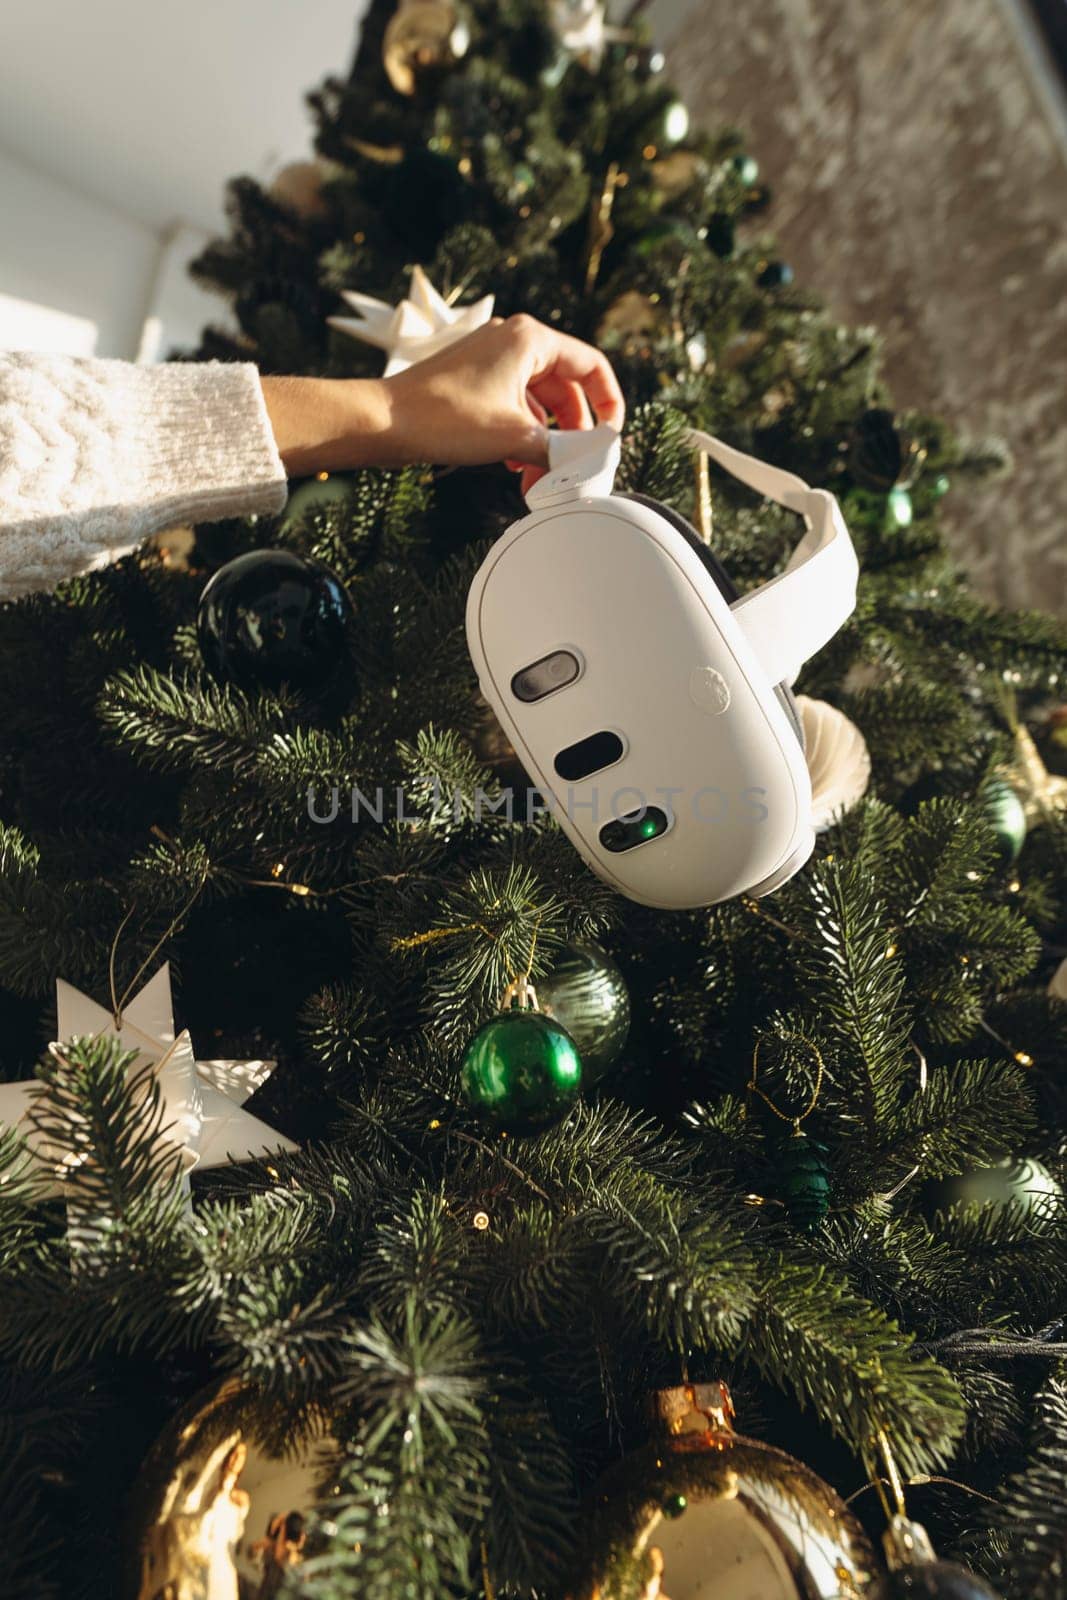 Amidst a Christmas tree, a girl is seen holding a virtual reality headset. by teksomolika